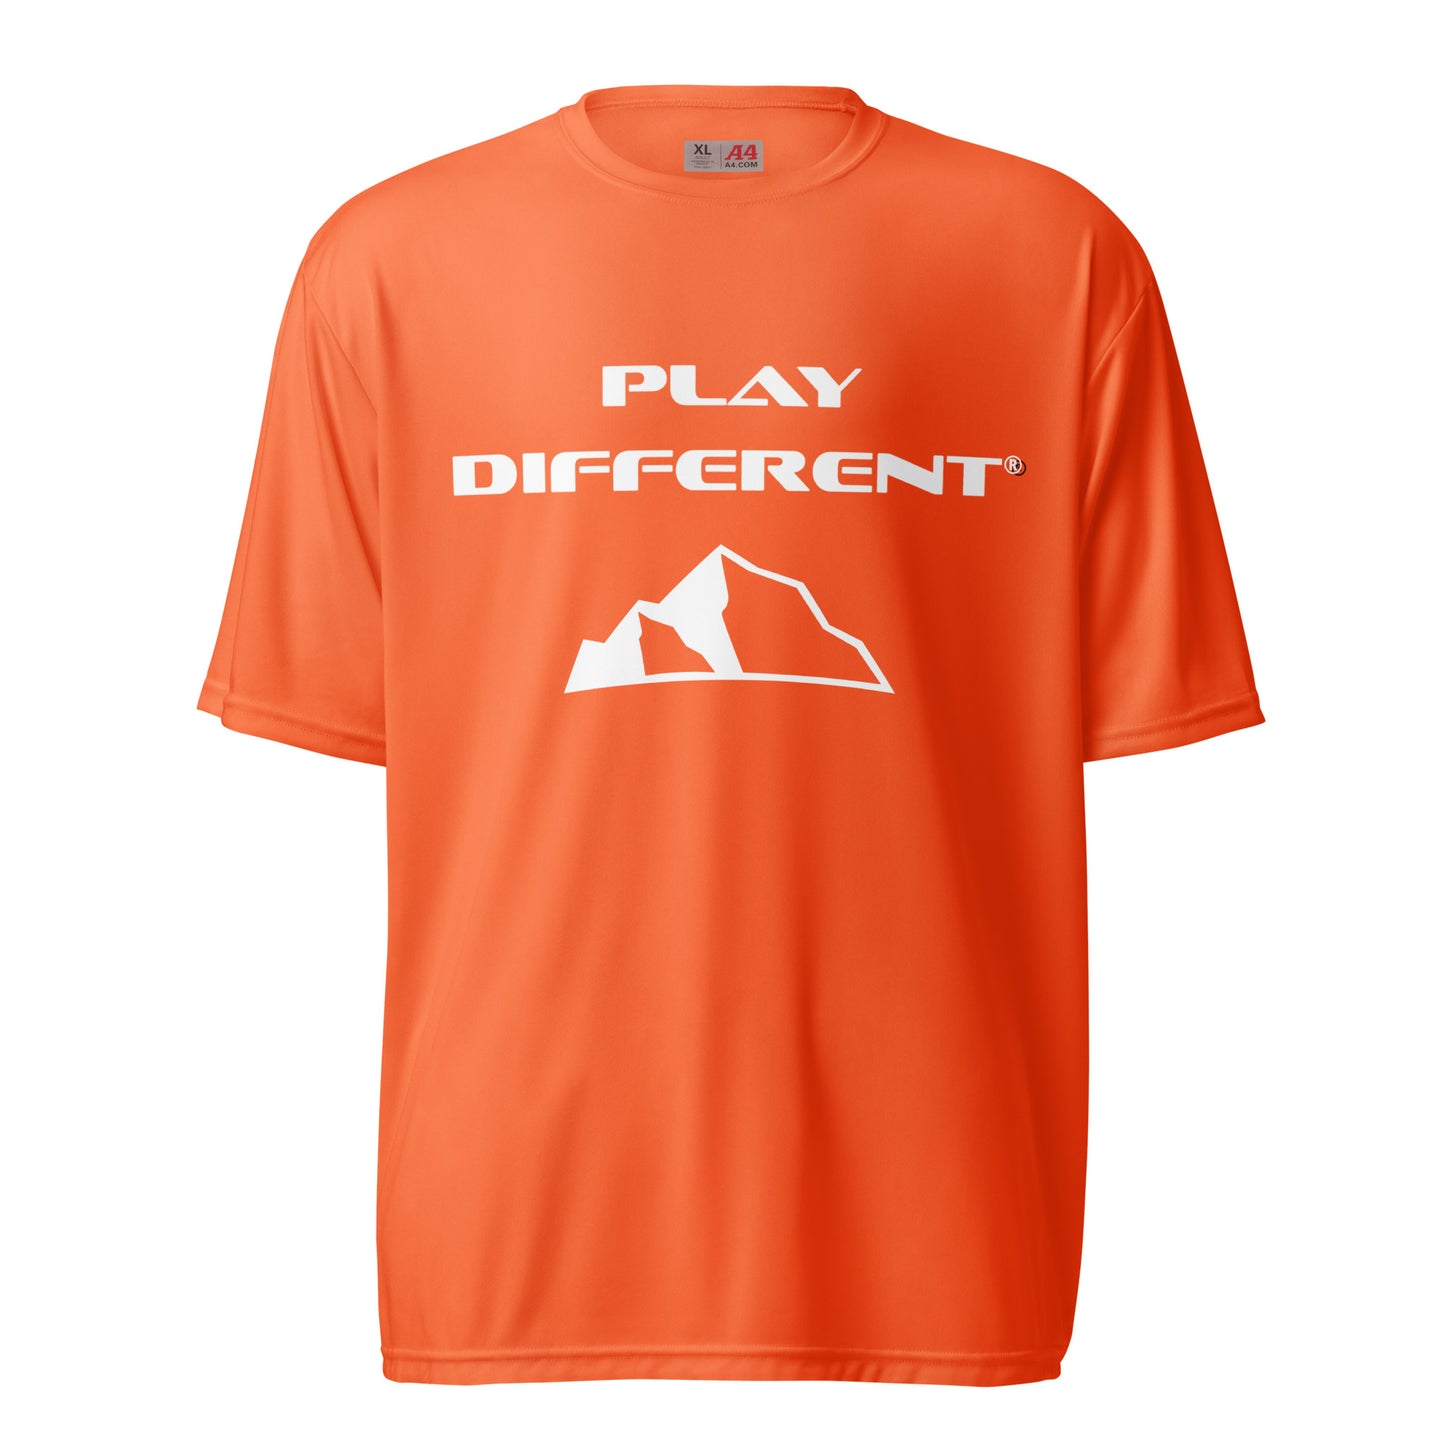 Play Different® Unisex performance crew neck t-shirt safety orange